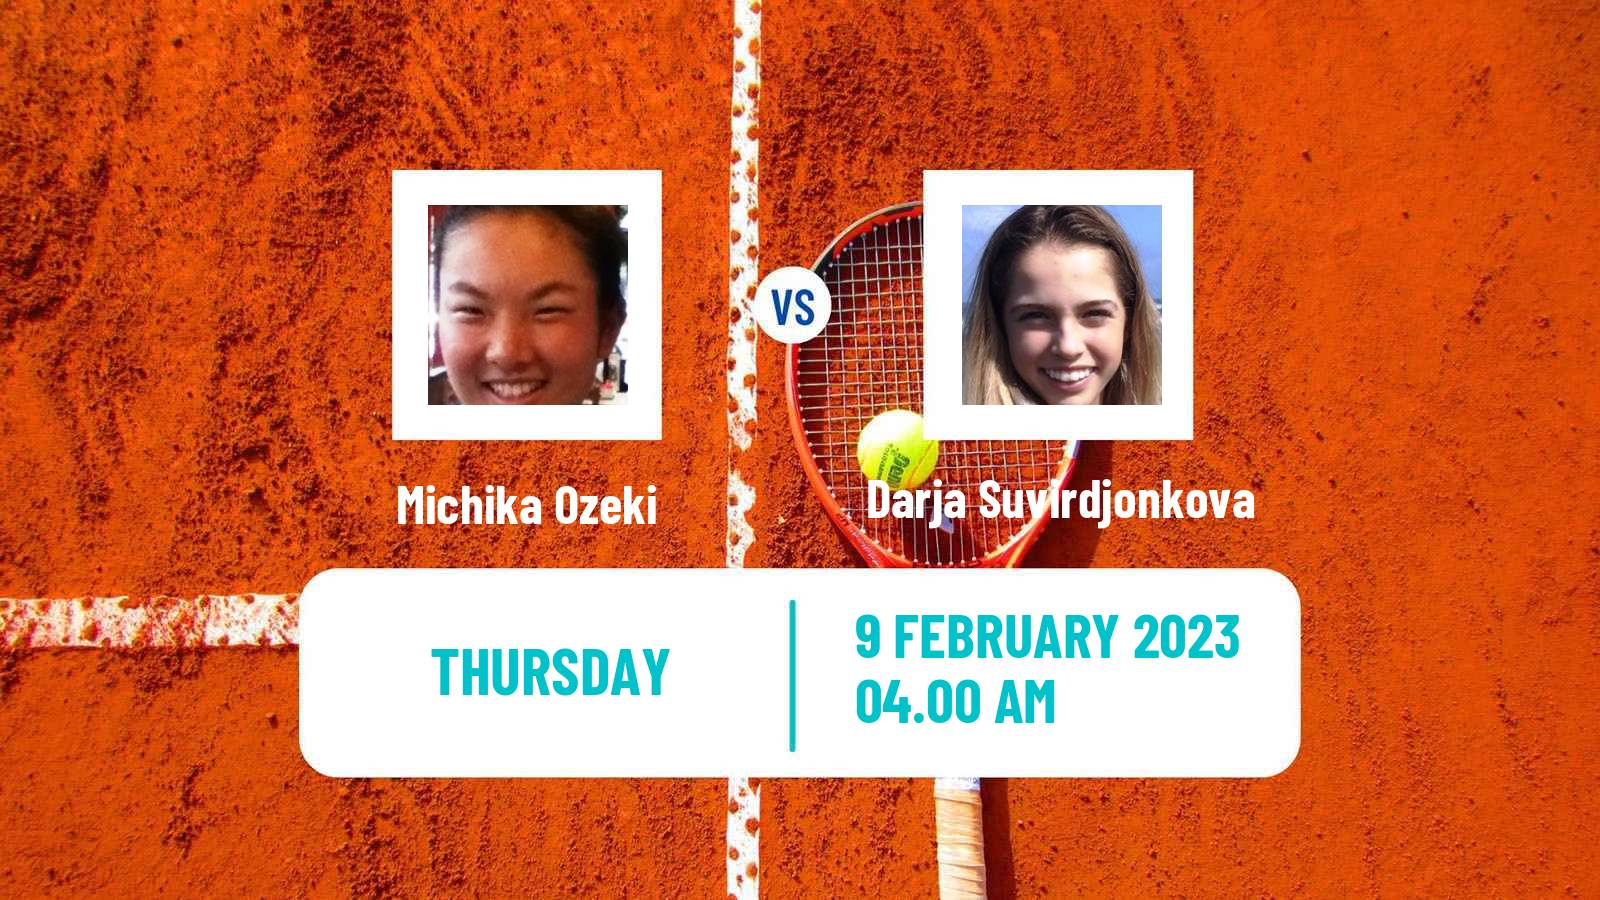 Tennis ITF Tournaments Michika Ozeki - Darja Suvirdjonkova